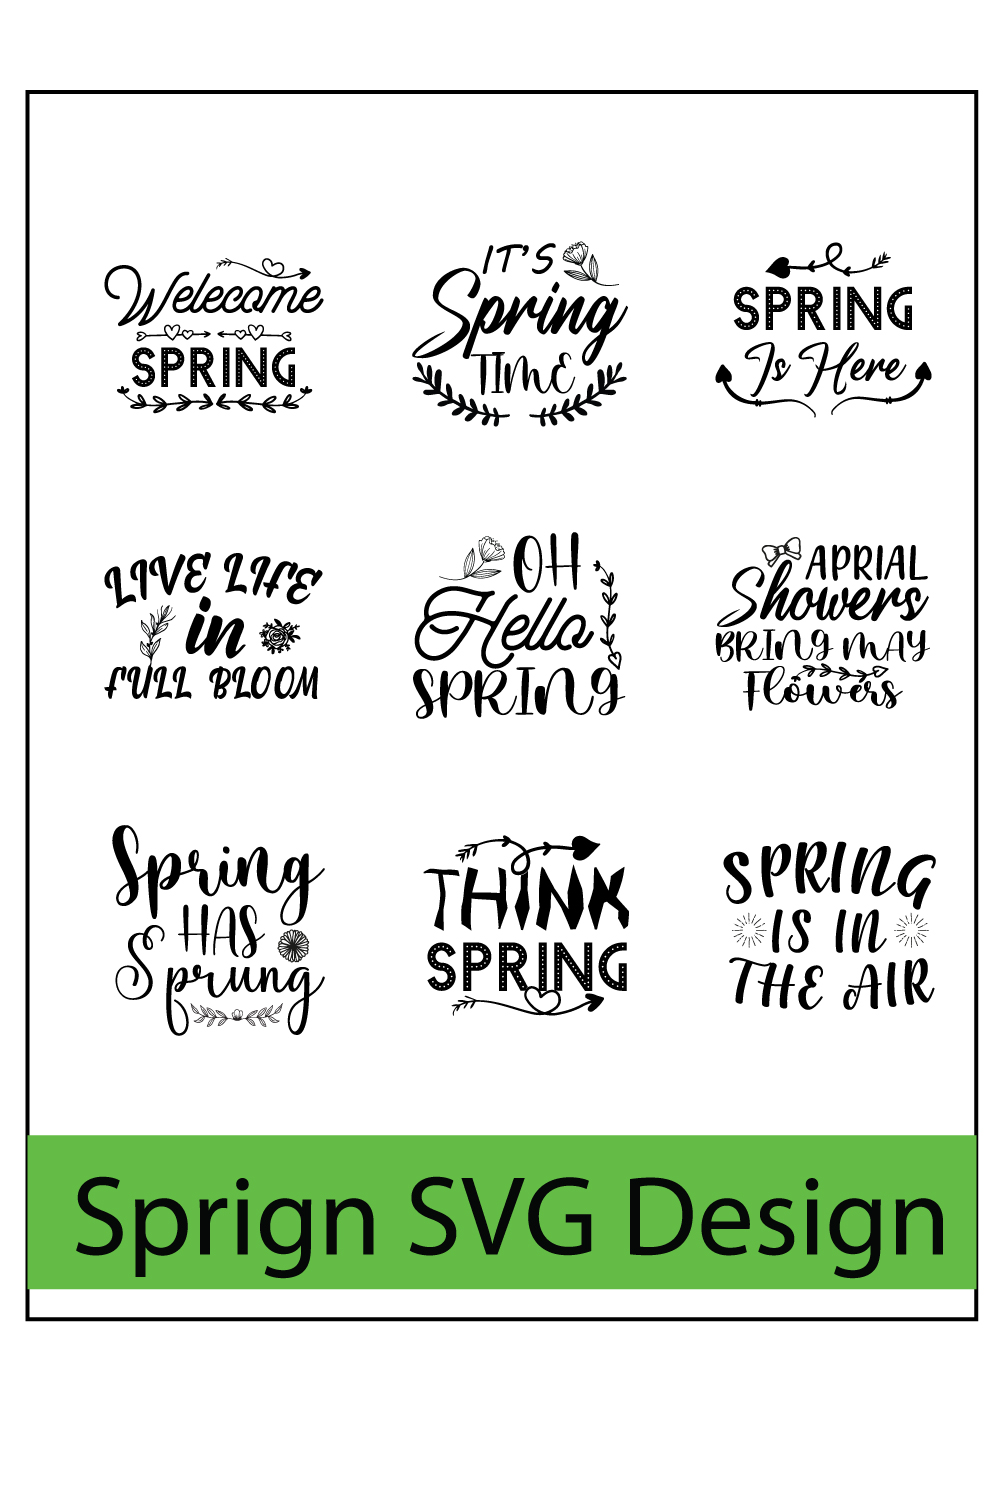 Spring Quotes SVG Designs Bundle pinterest image.